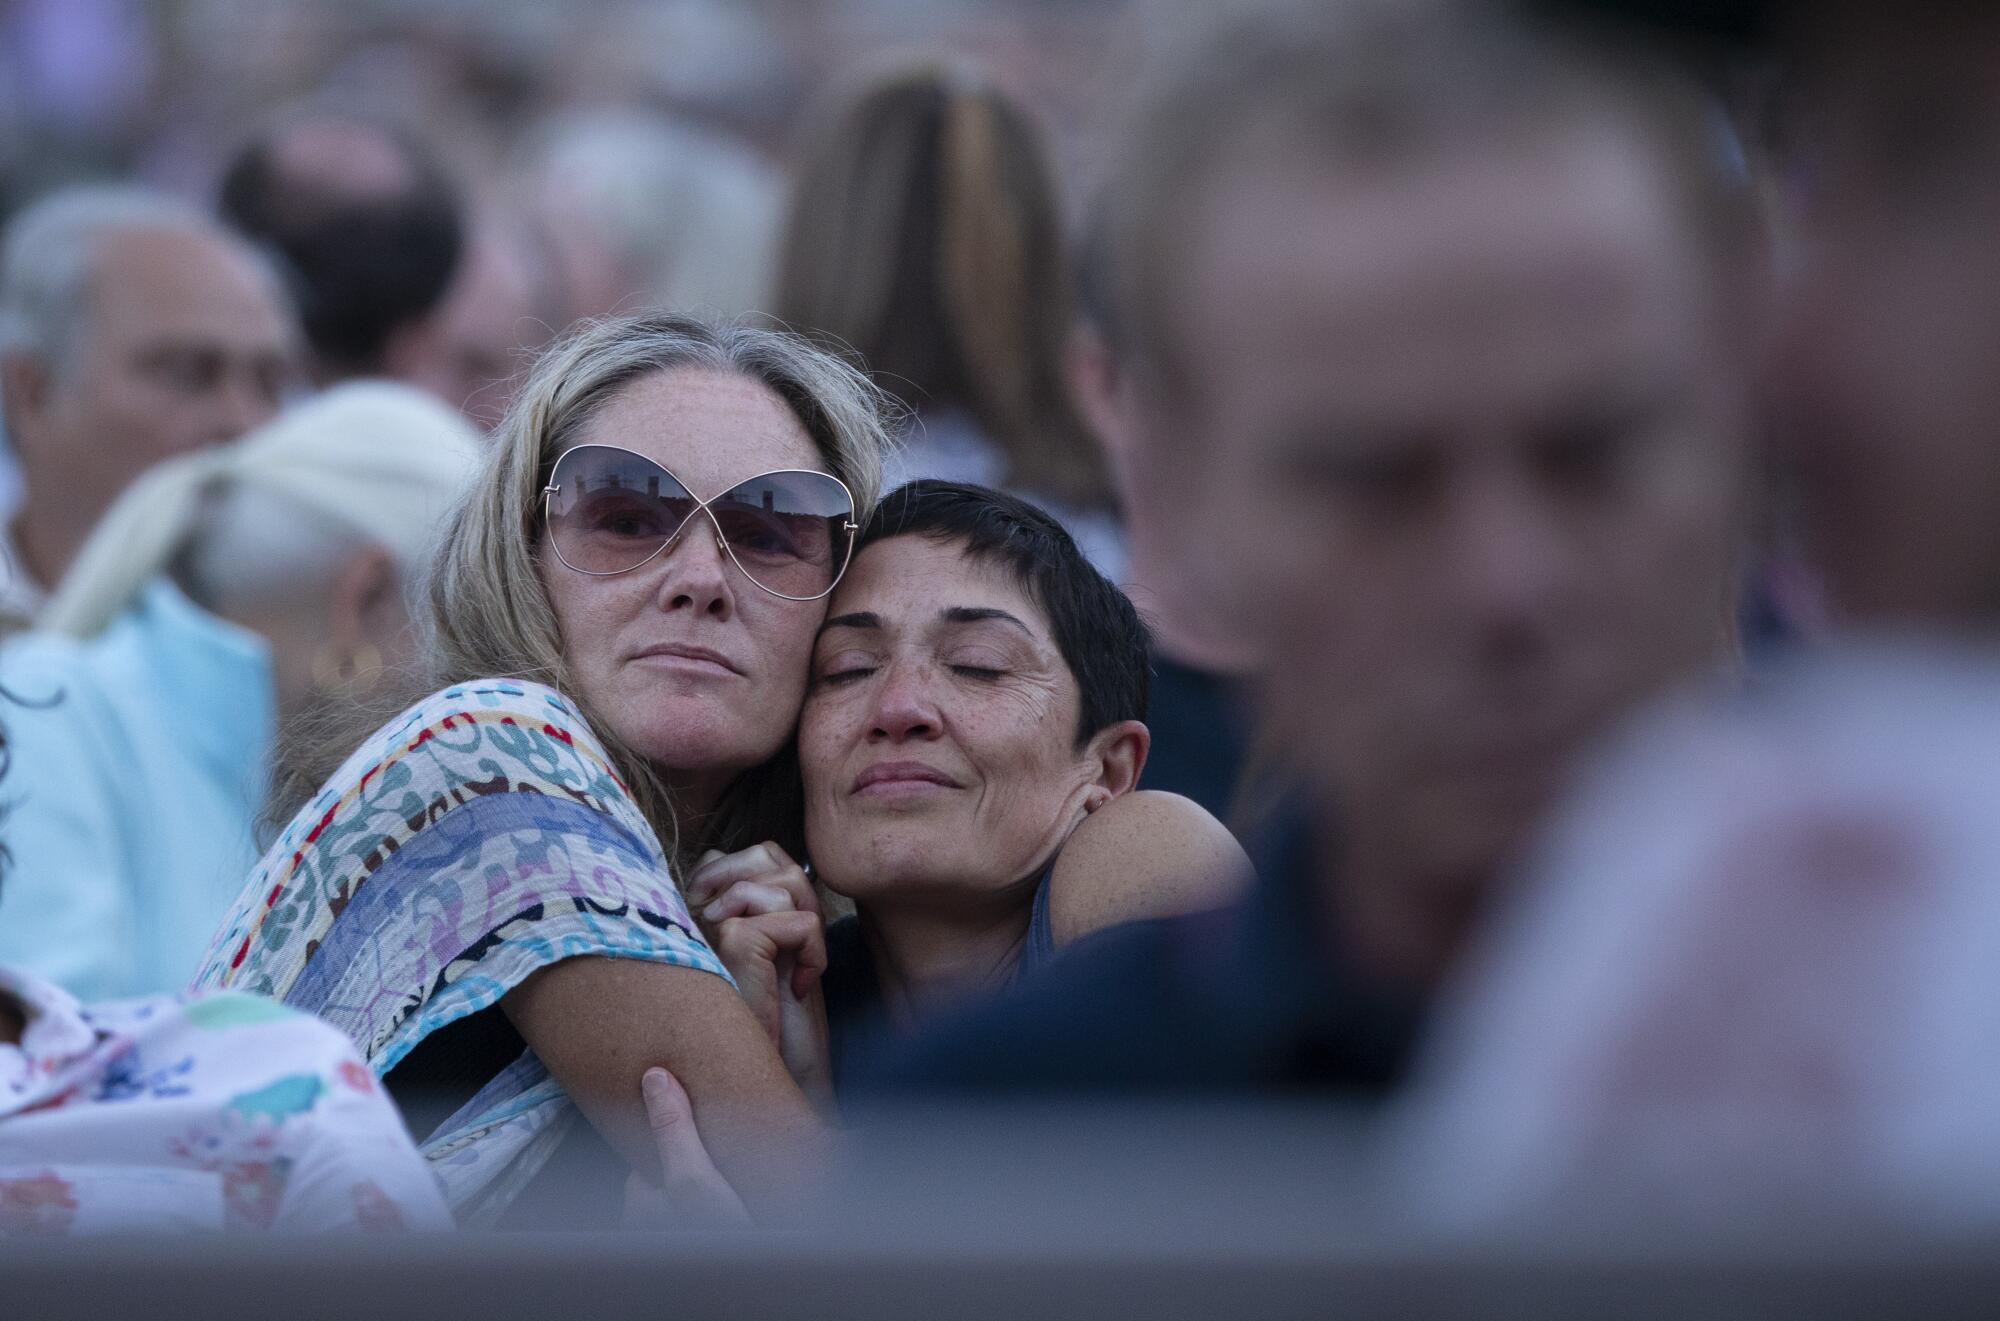 Amid a seated crowd, two women hug.